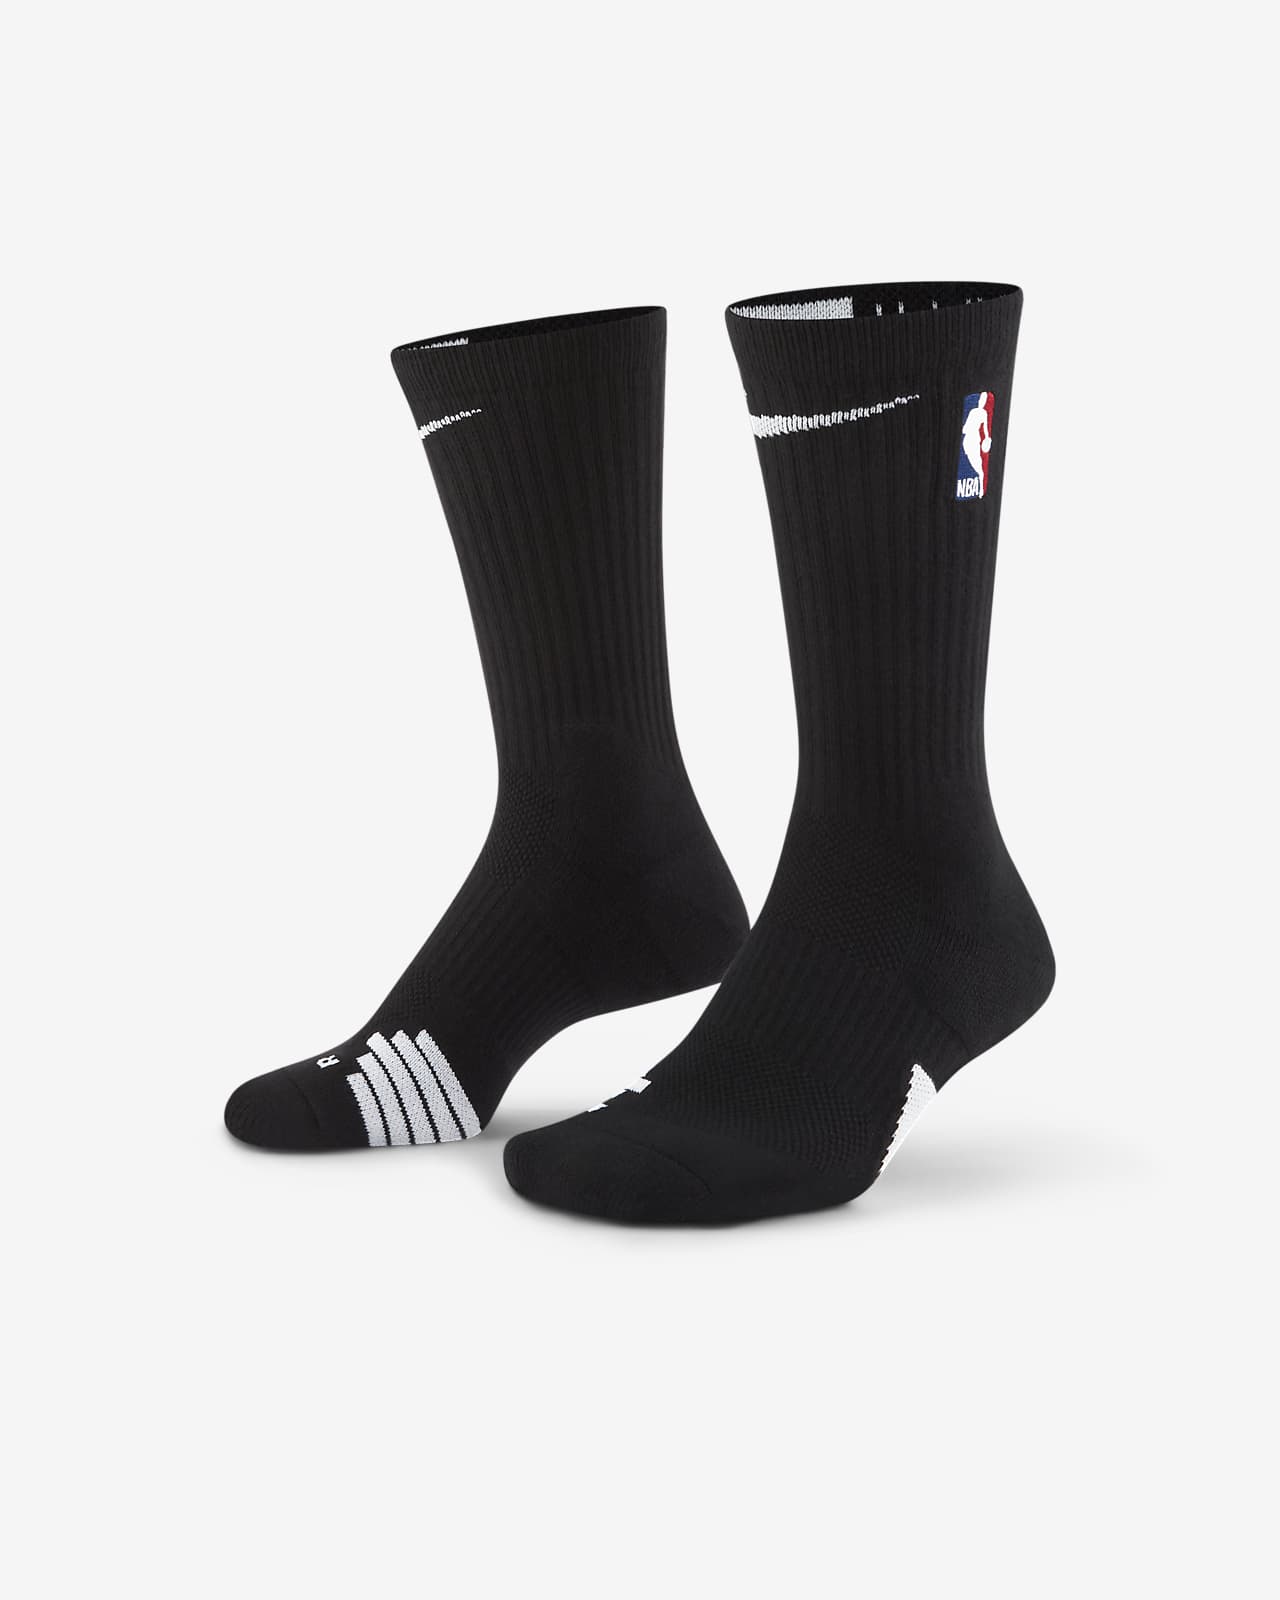 NIKE NBA ELITE Socks - Power Grips/Grip Quick - White/Black- Large